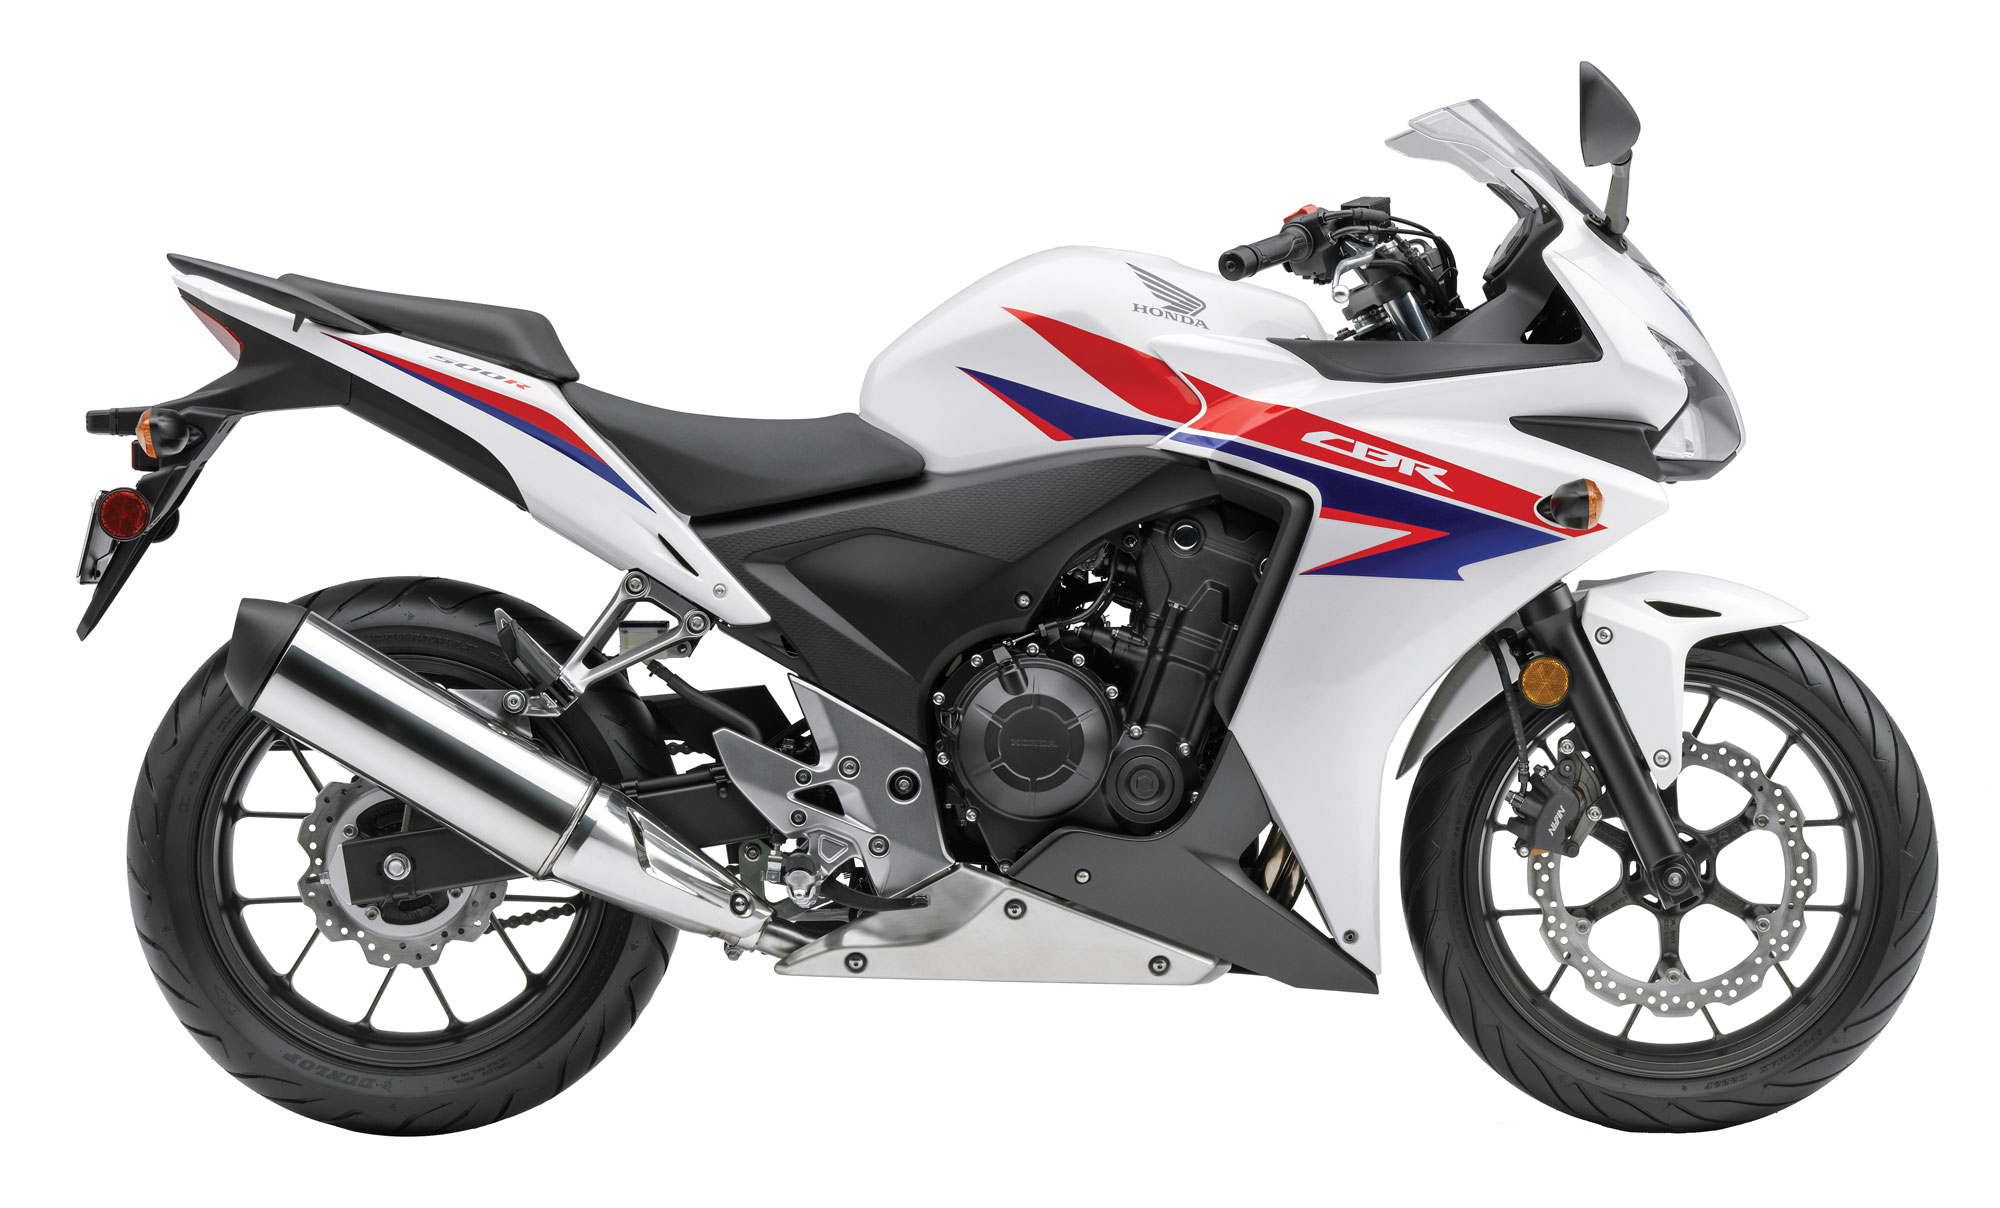 http://www.totalmotorcycle.com/motorcycles/2013models/2013-Honda-CBR500R4.jpg